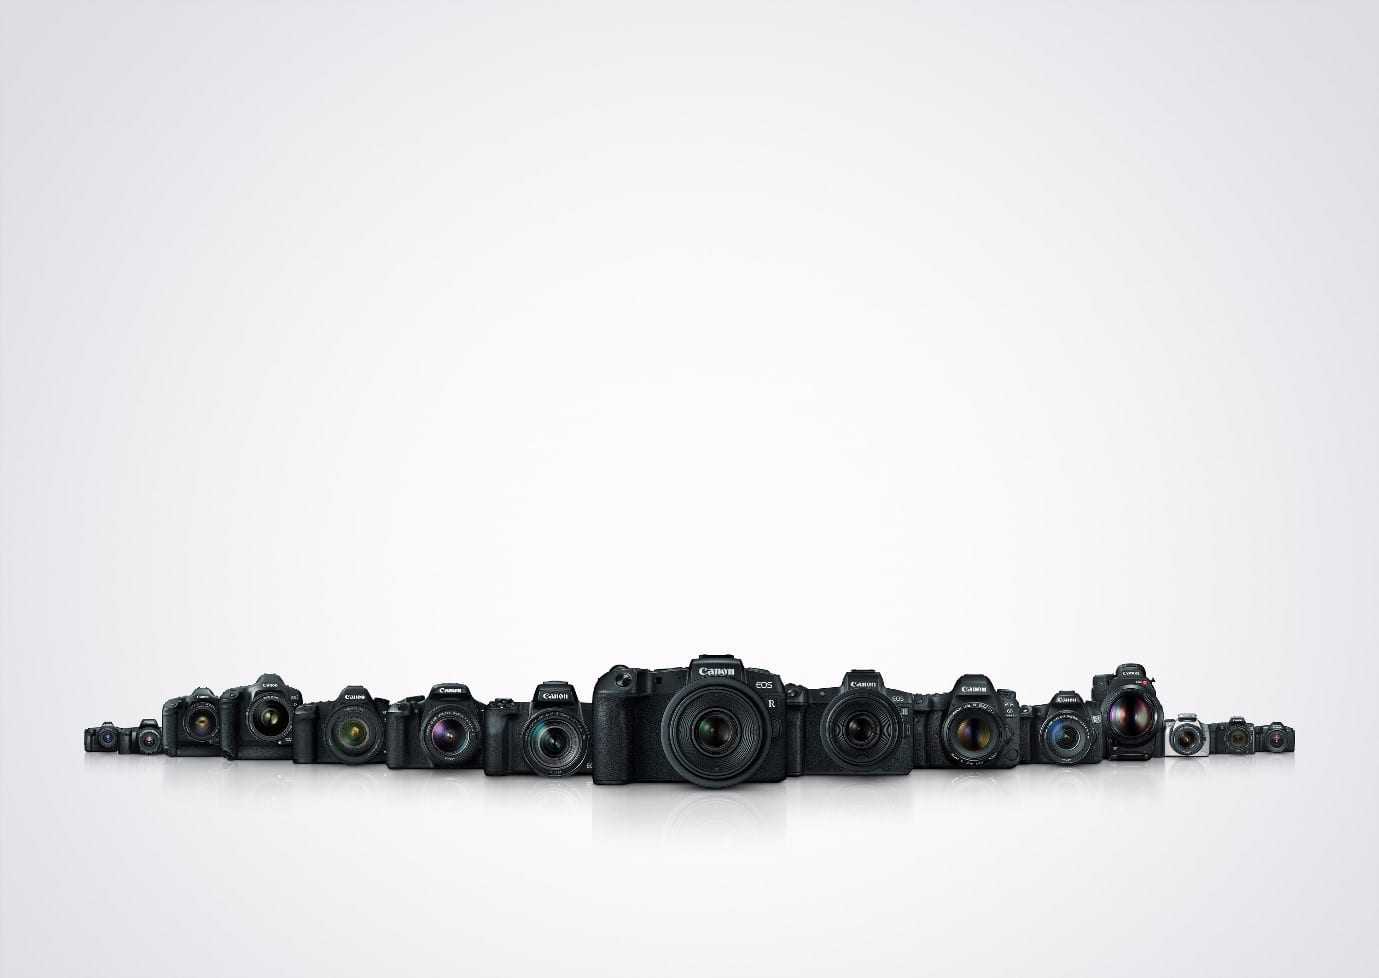 H Canon γιορτάζει την παραγωγή 100 εκατομμυρίων φωτογραφικών μηχανών με εναλλάξιμους φακούς της σειράς EOS